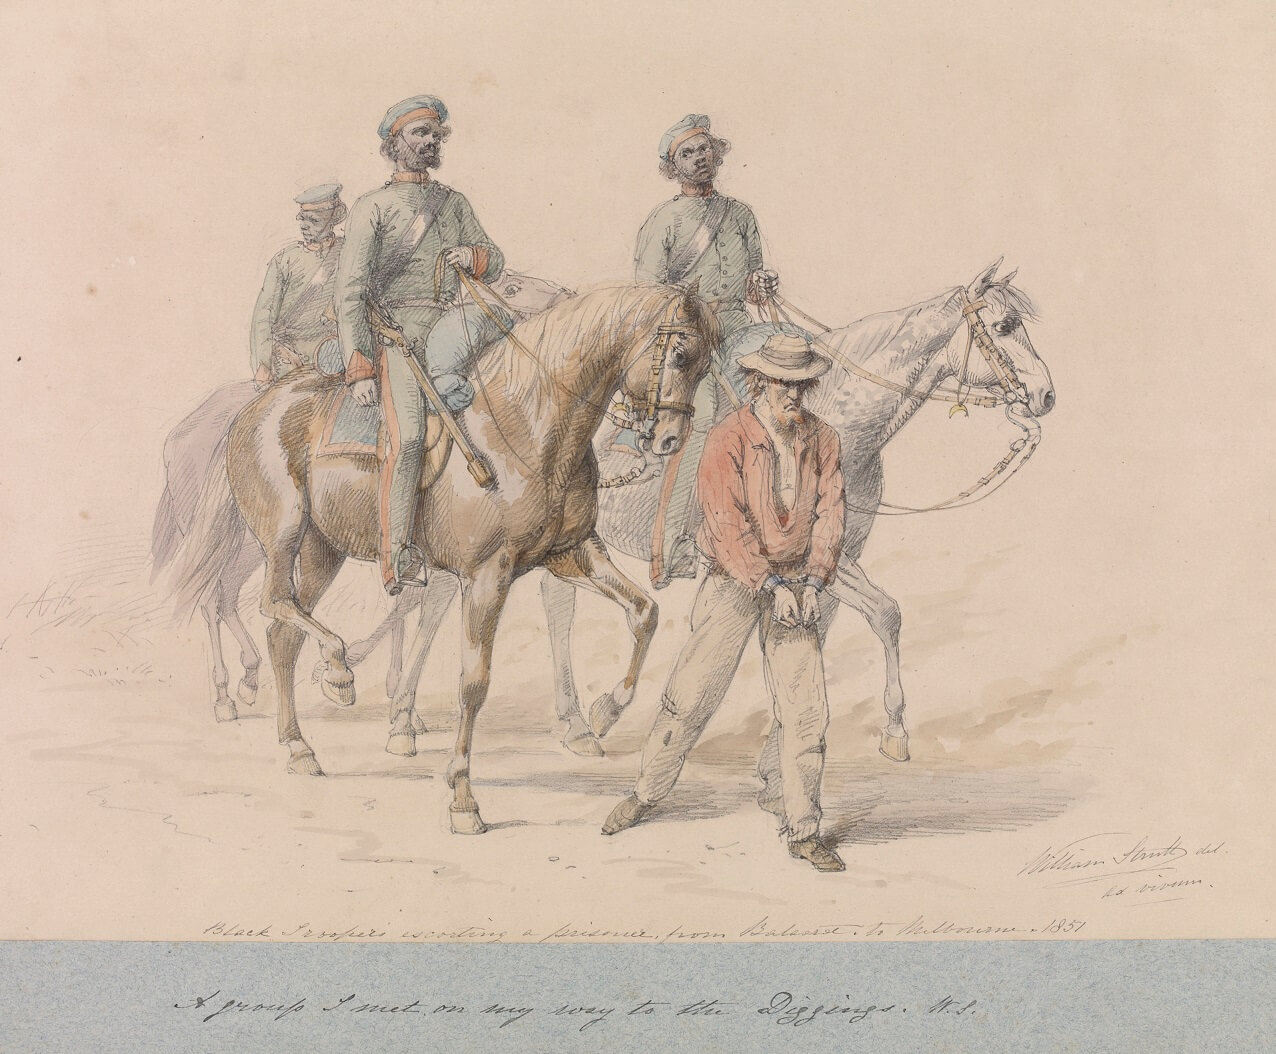 Drawing of three uniformed men on horseback escorting a prisoner who is walking ahead of them.